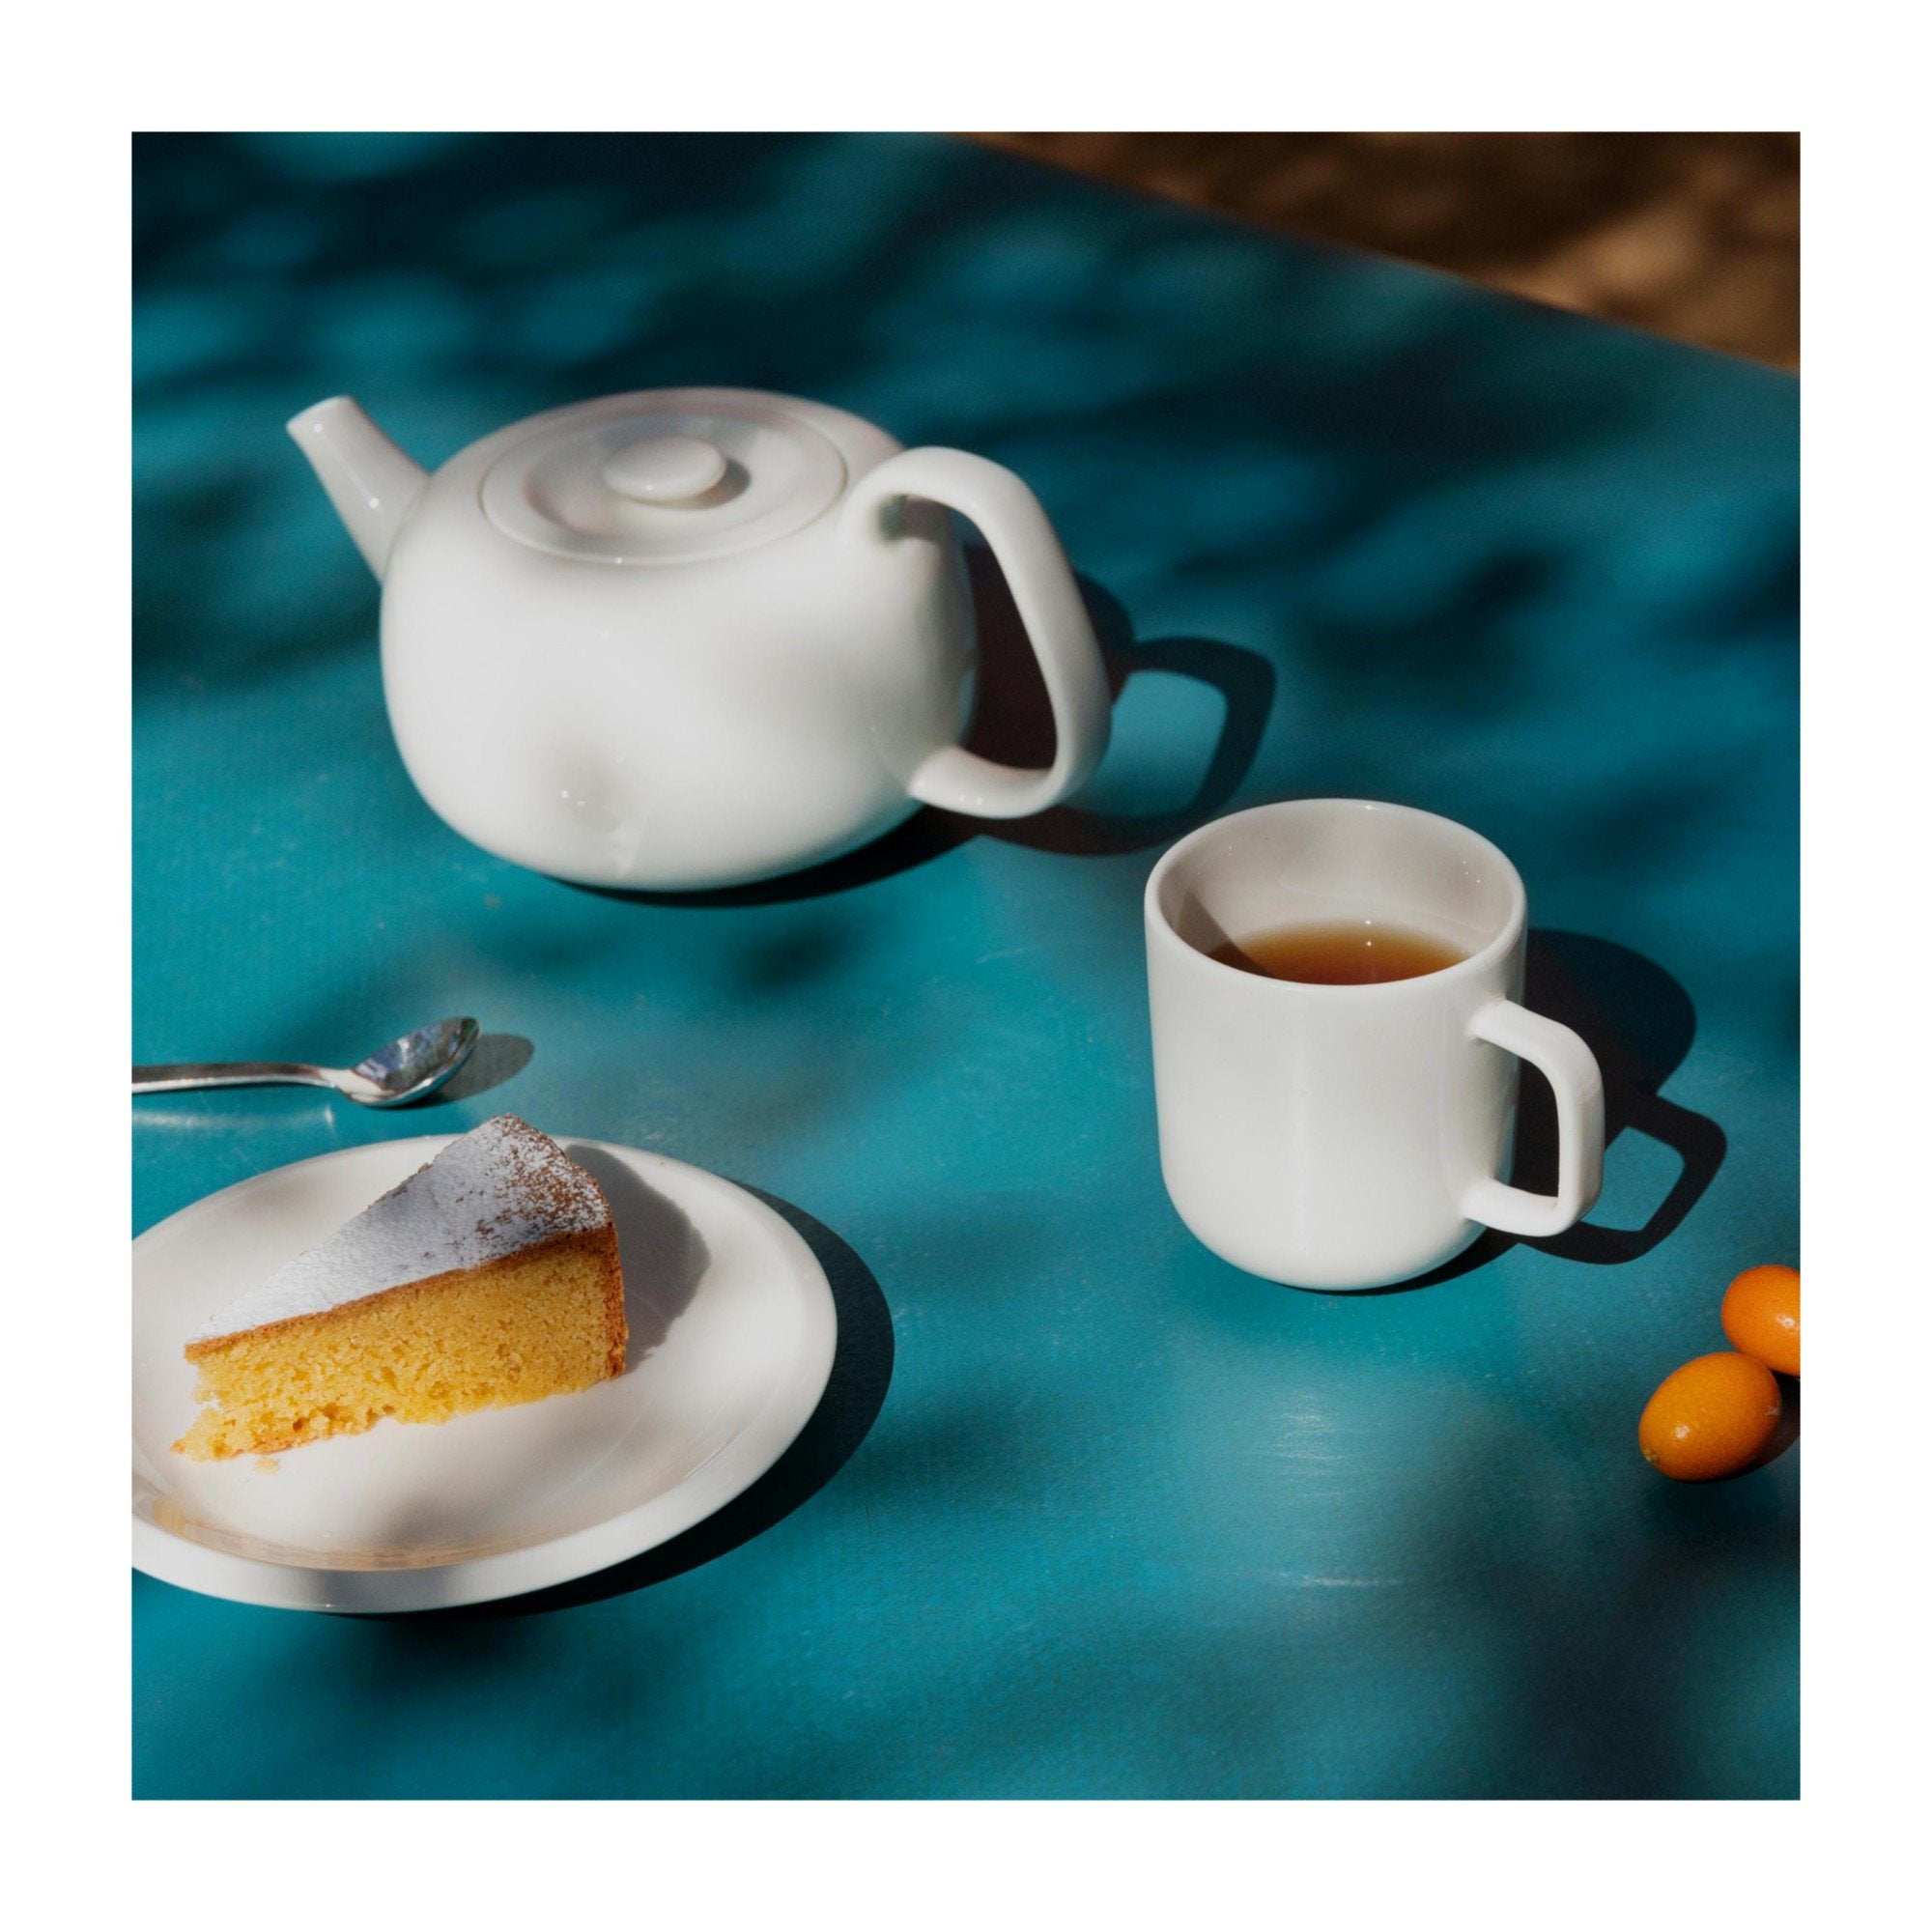 Iittala Raami Teapot White, 1,1 L